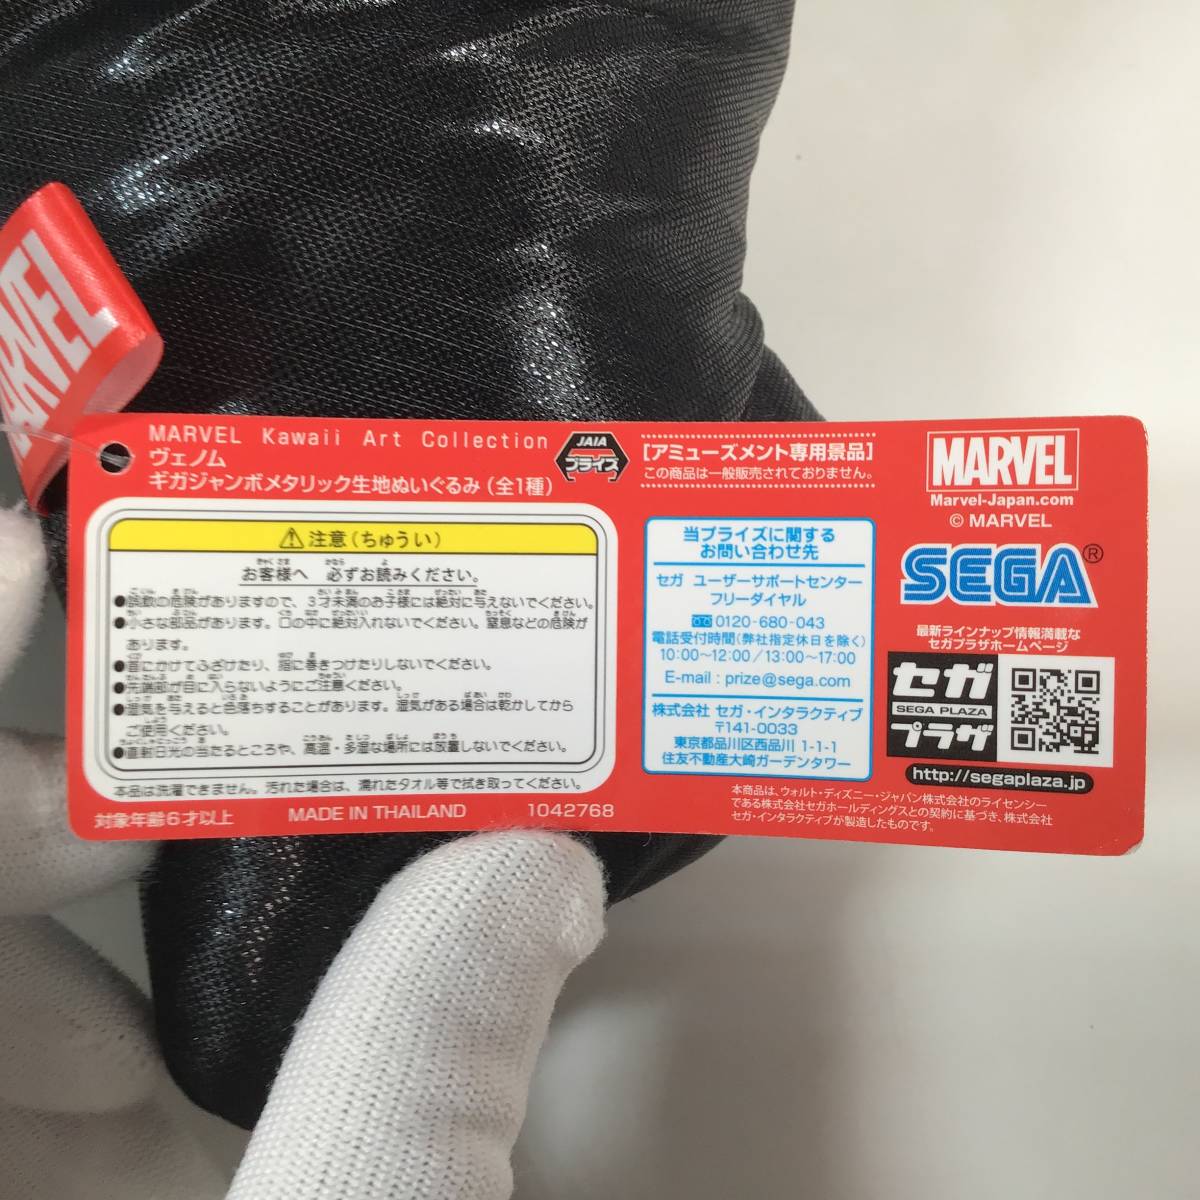 N-2220*ma- bell venom Spider-Man appearance. character soft toy MARVELvenom Giga jumbo metallic cloth soft toy 